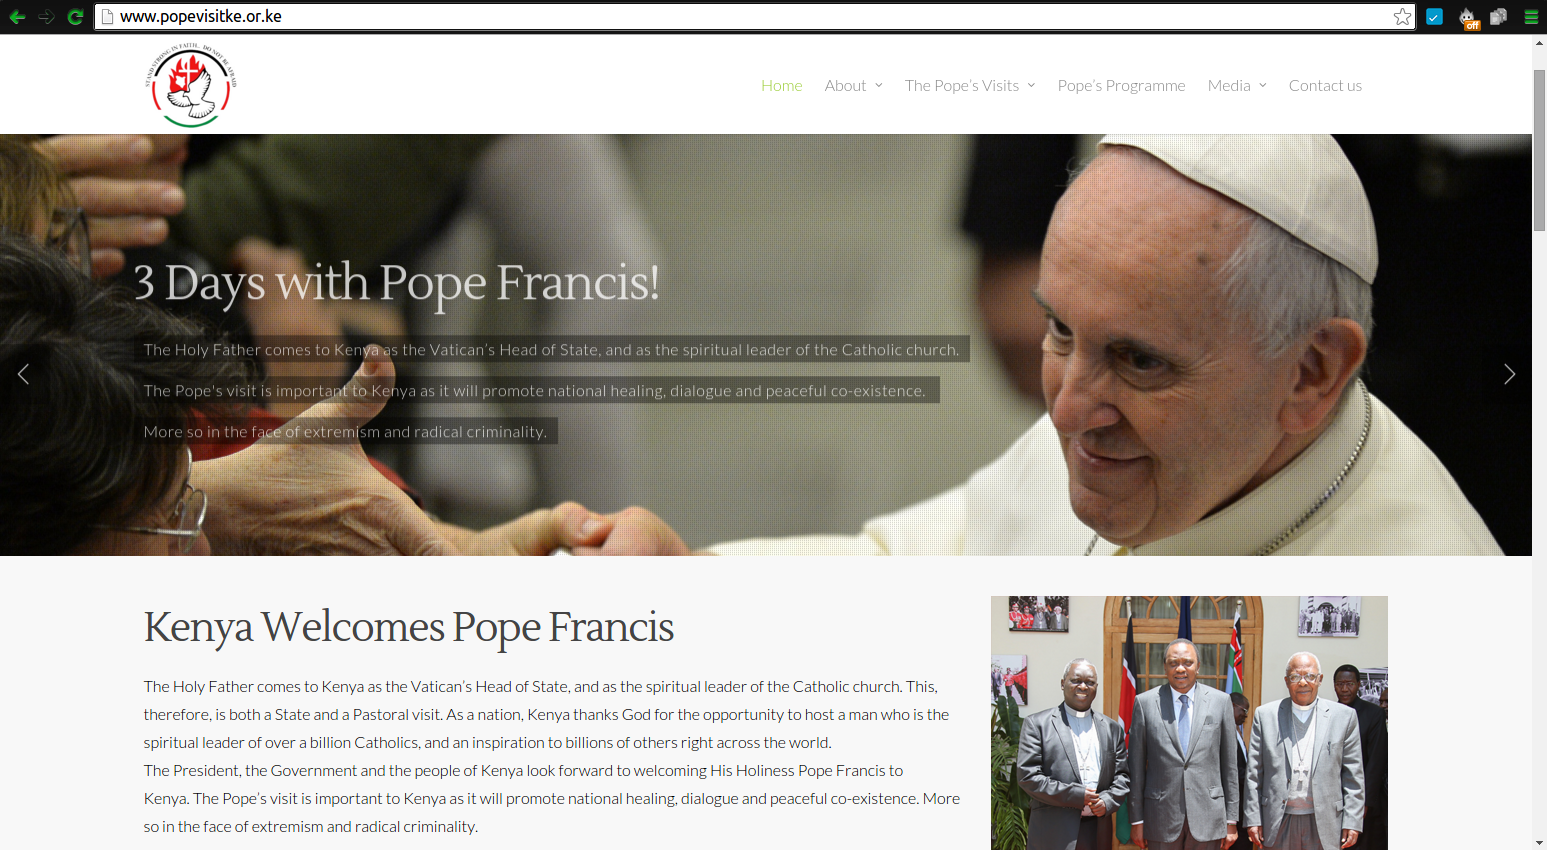 Managing digital communication around the Pope’s Visit to Kenya